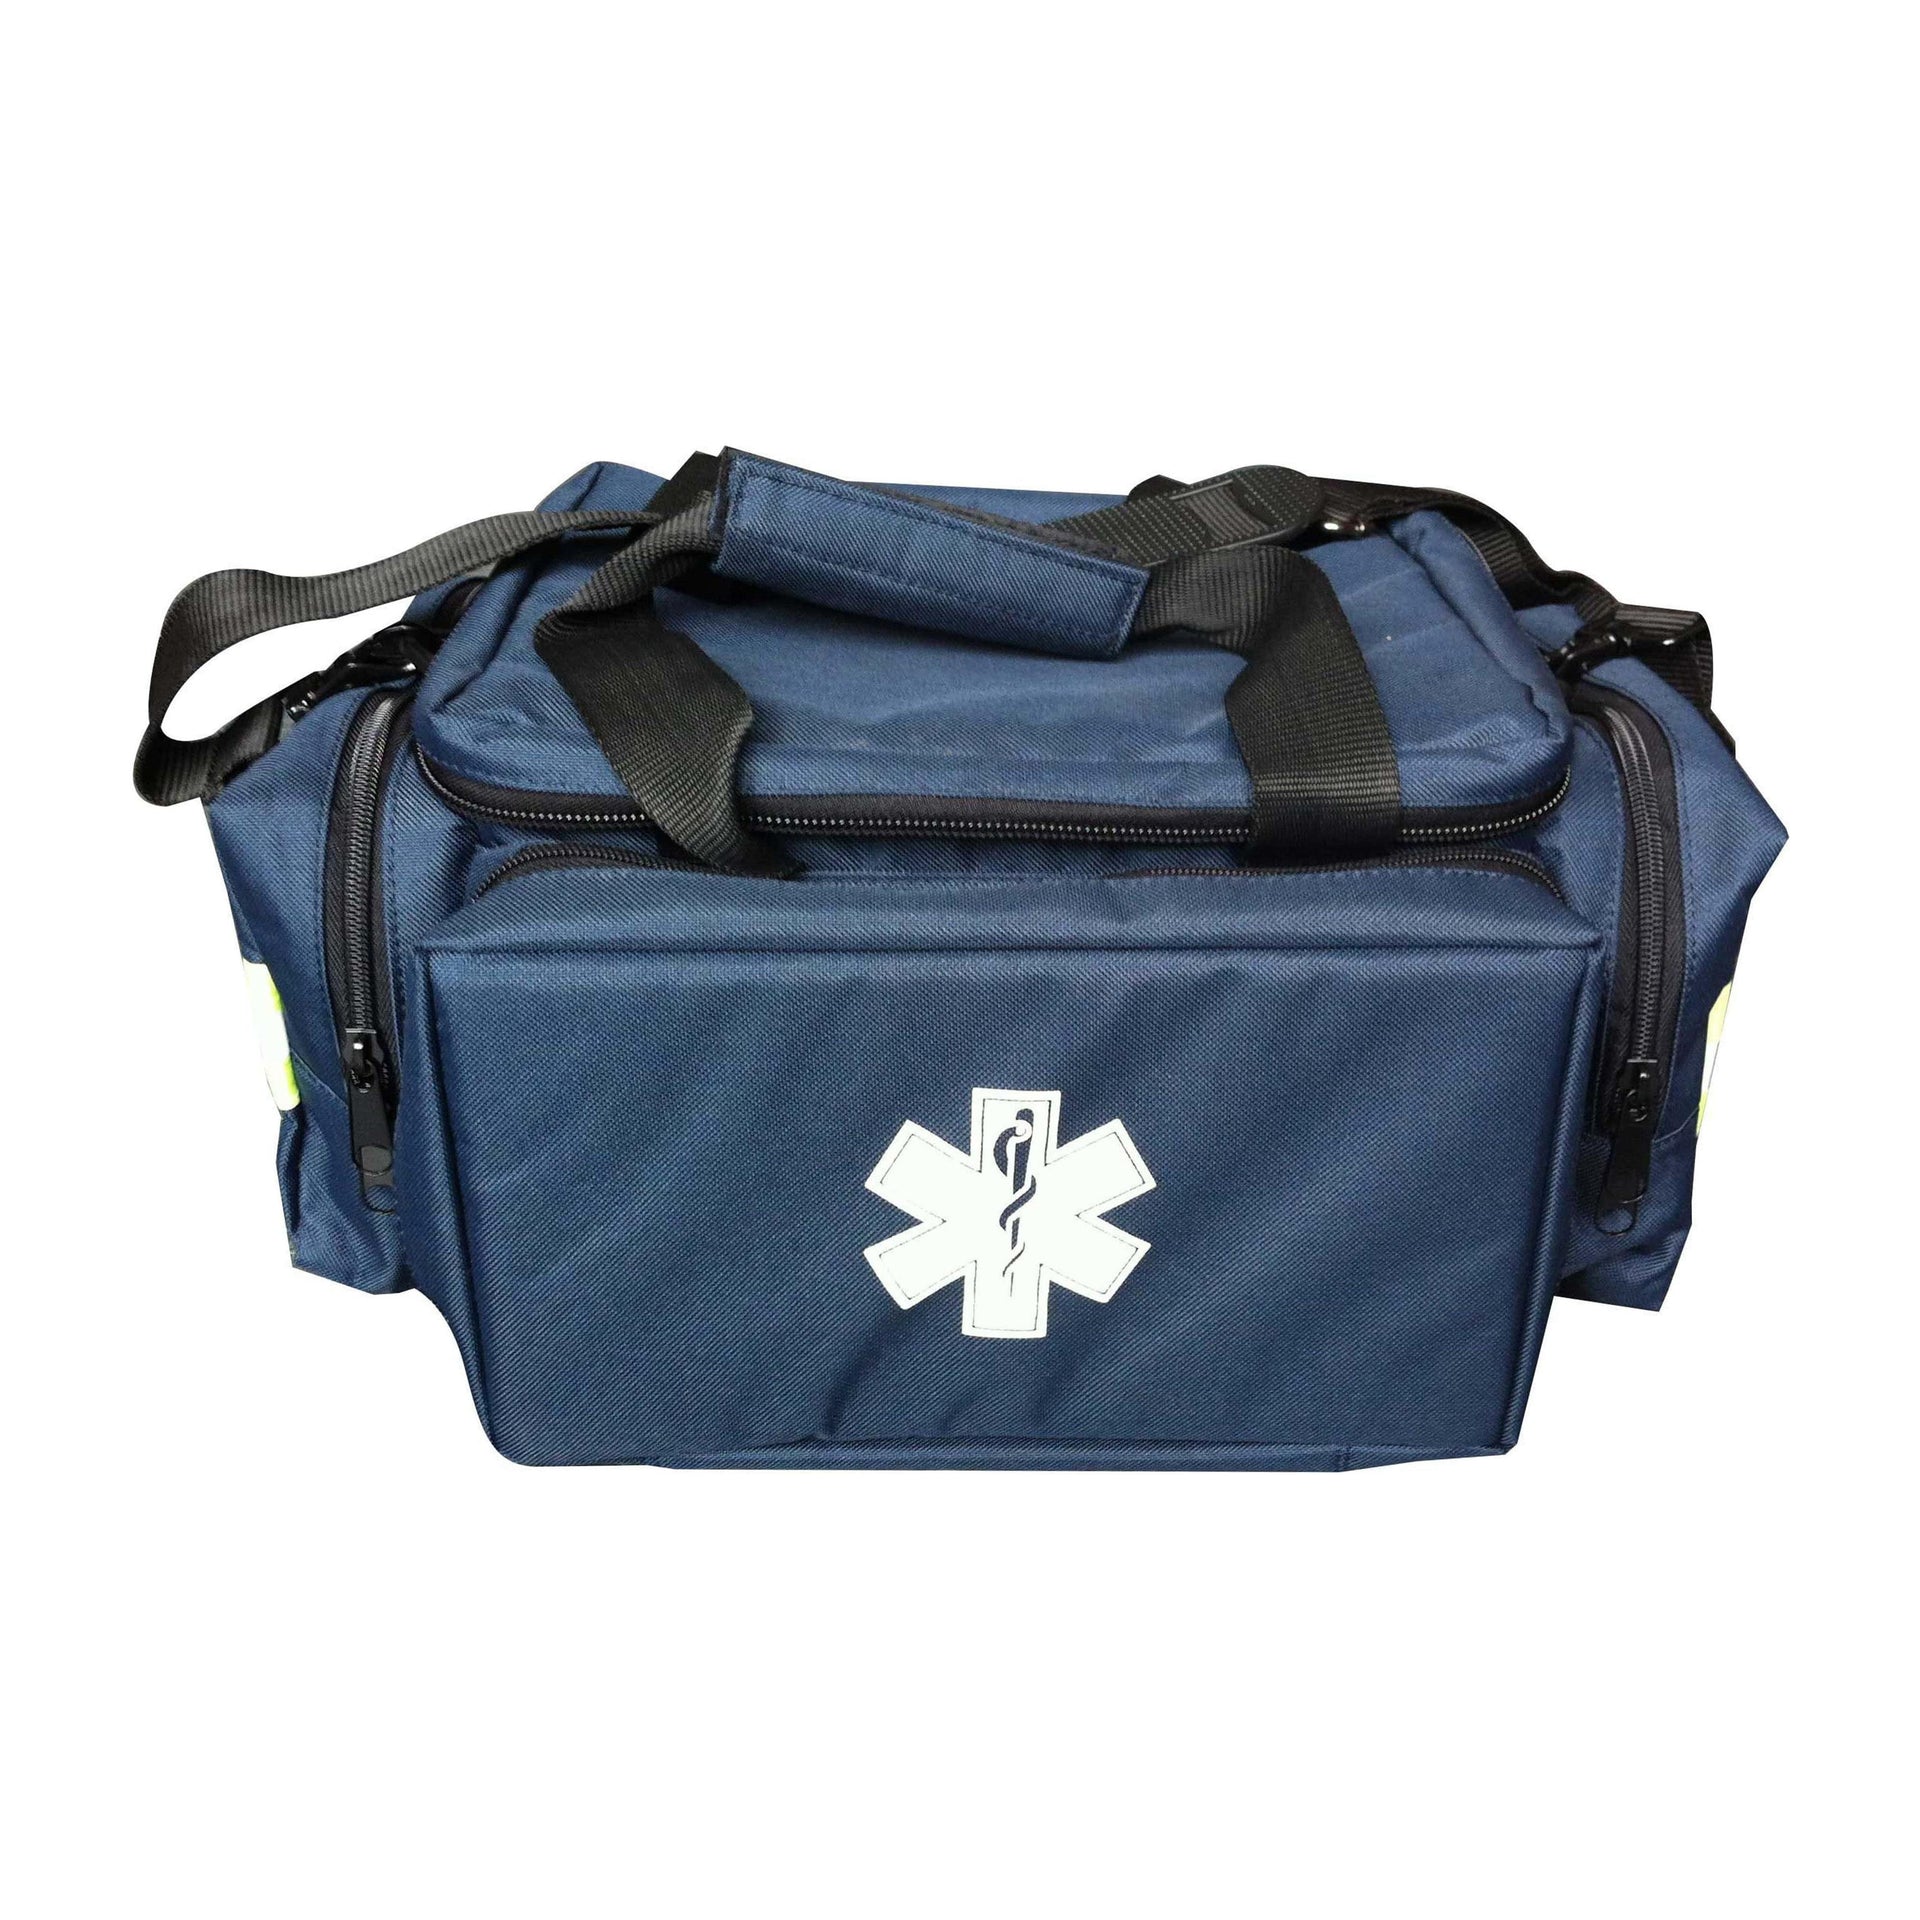 Paramedic Shop Add-Tech Pty Ltd Pouch Compact Trauma Bag - BAG ONLY